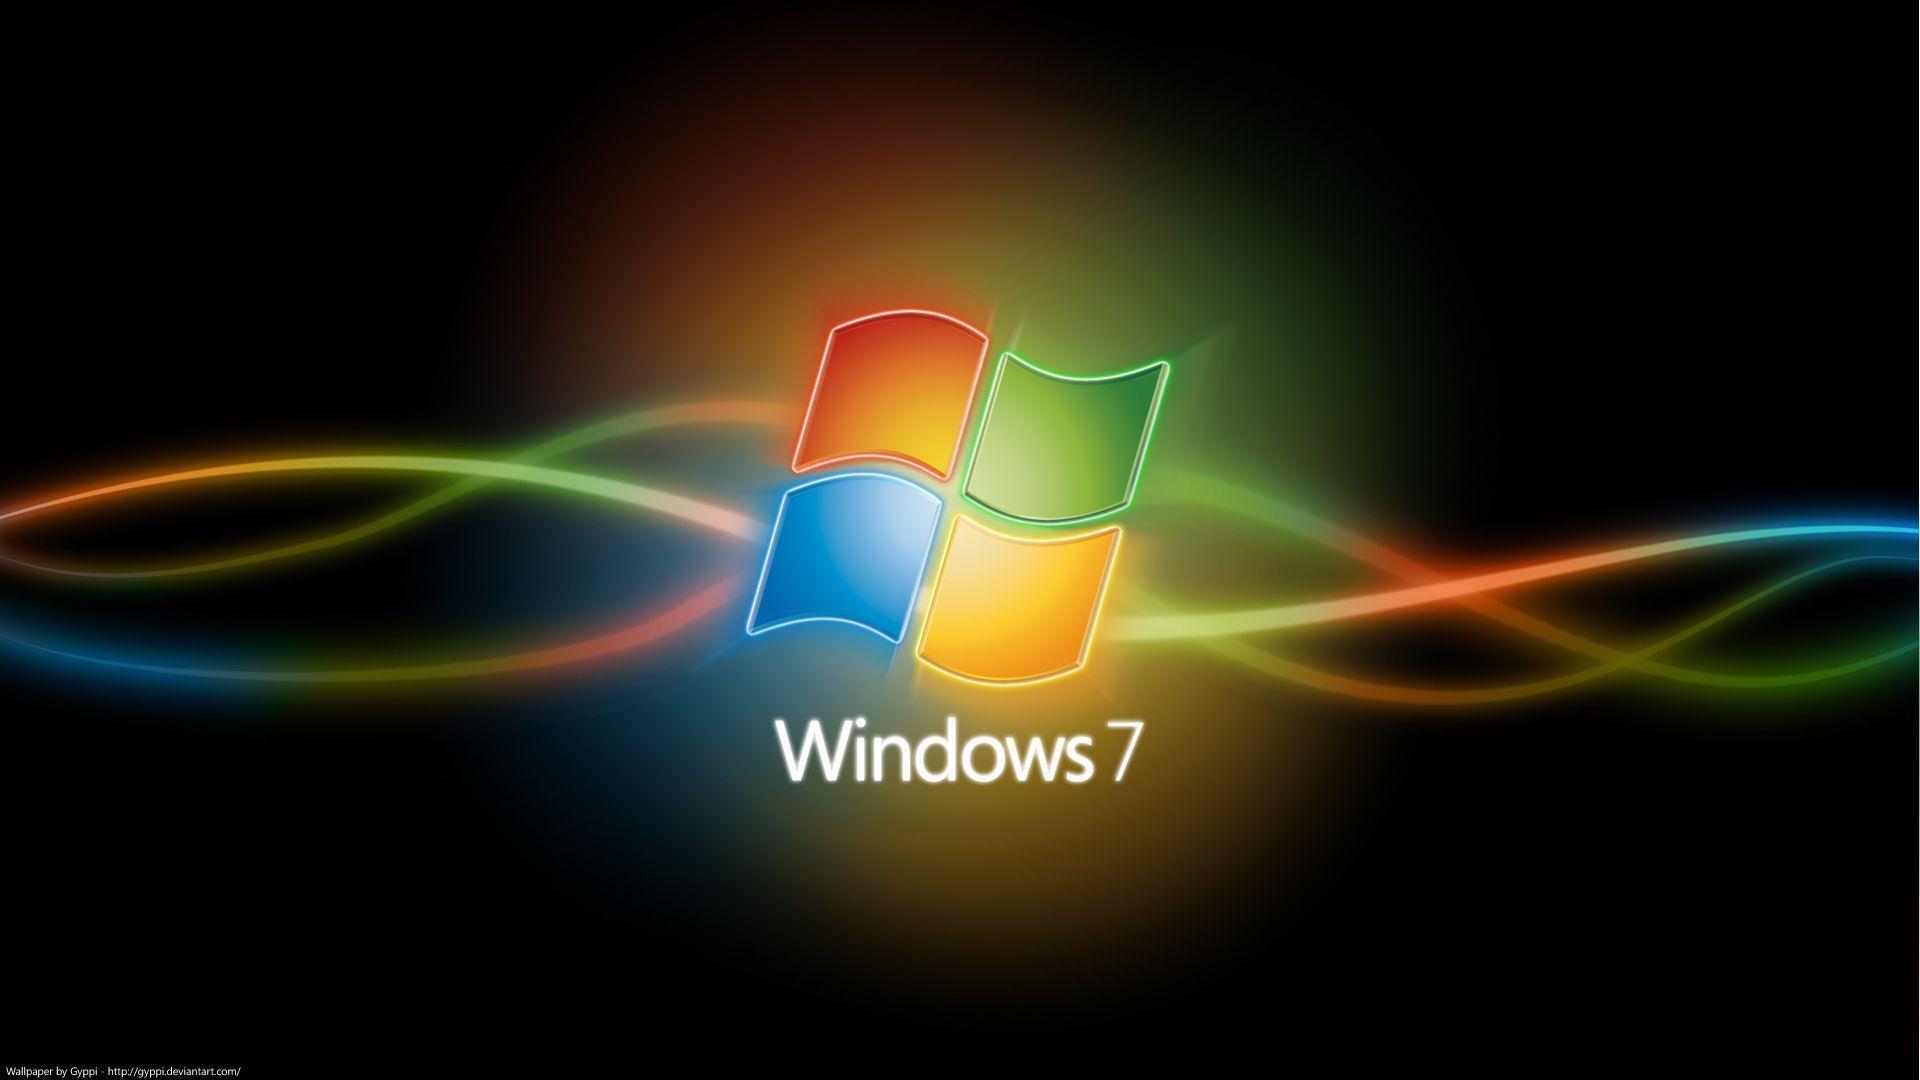 Windows 7 Computer Wallpaper, Desktop Background 1920x1080 Id: 75091